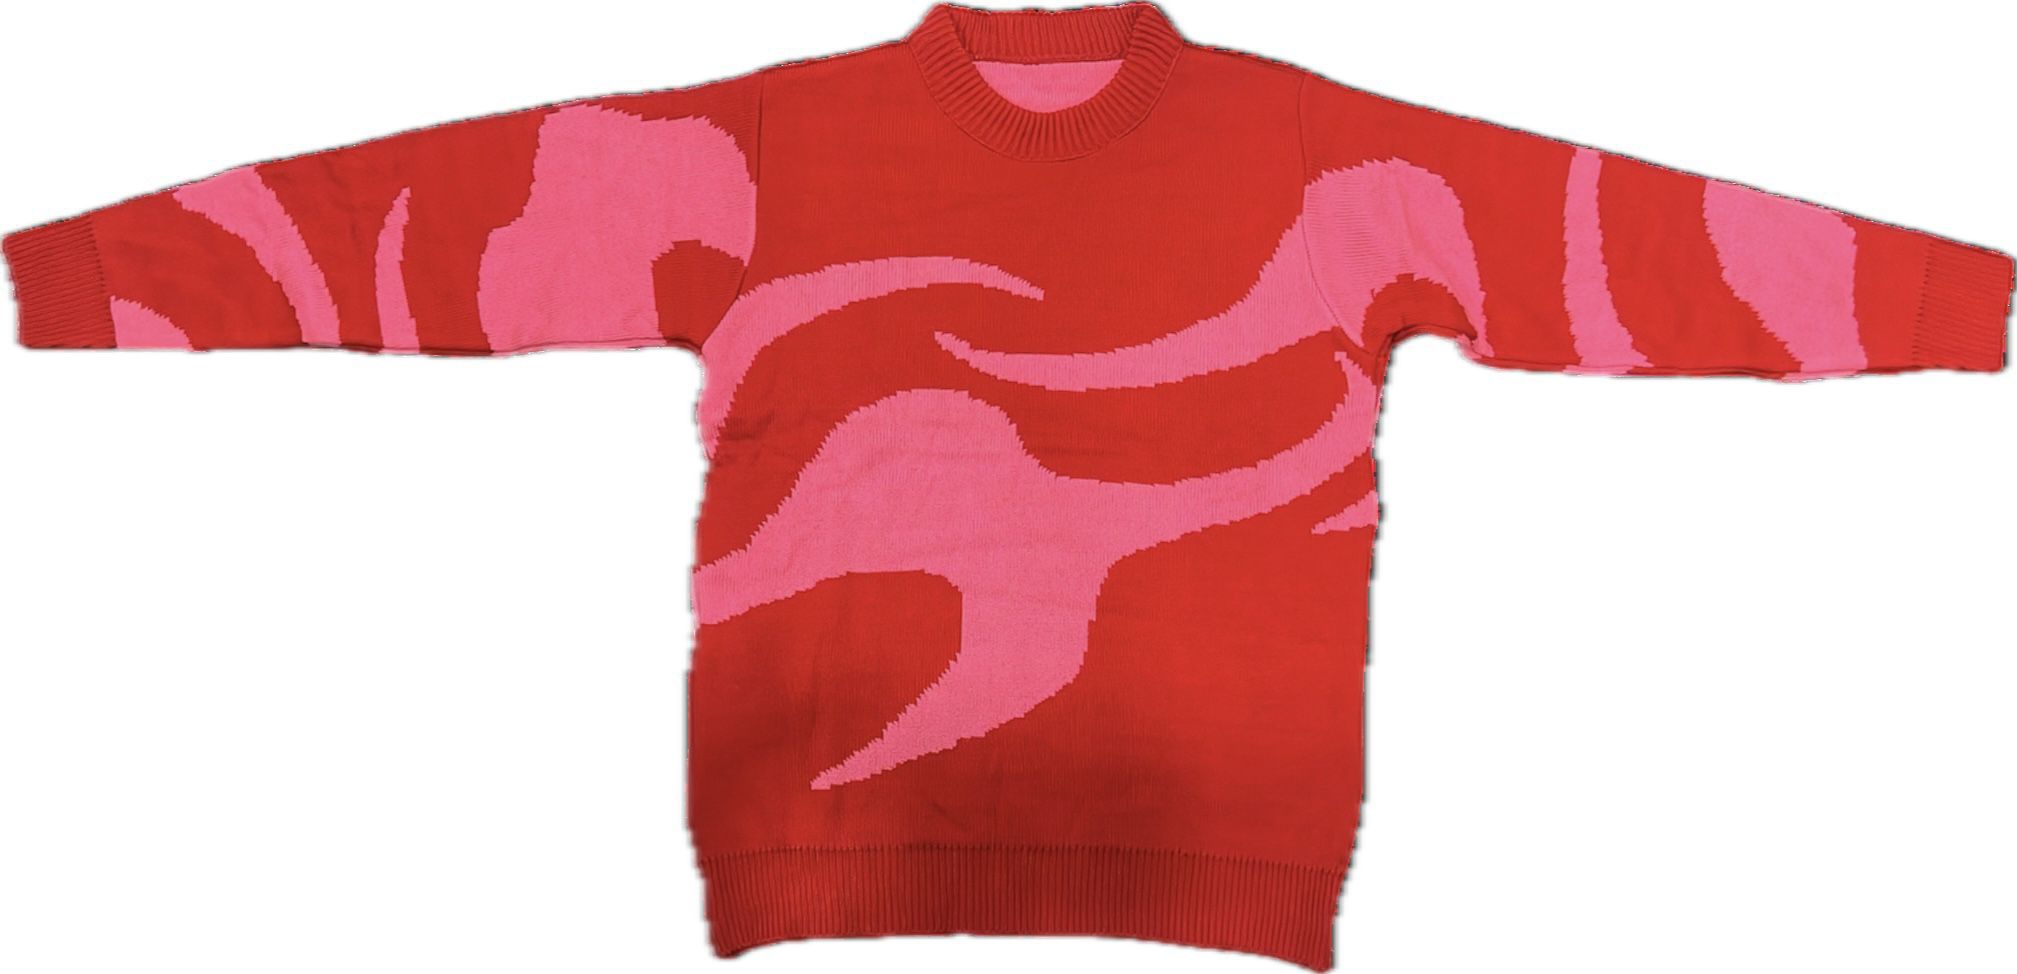 Hellstar Supreme Sweater - Red